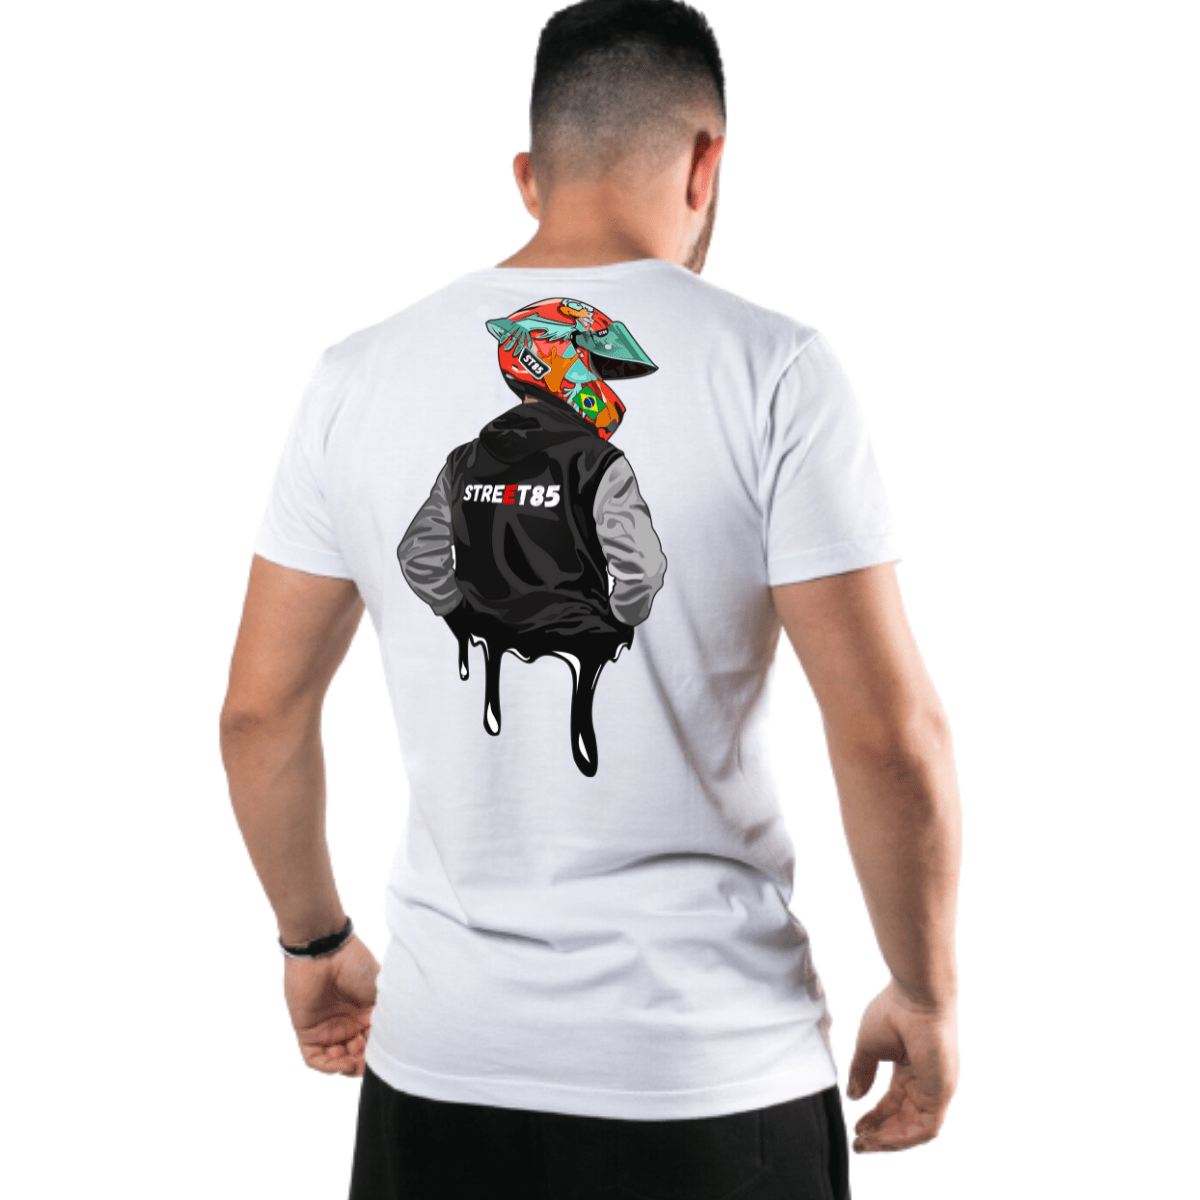 Designs PNG de motociclista para Camisetas e Merch